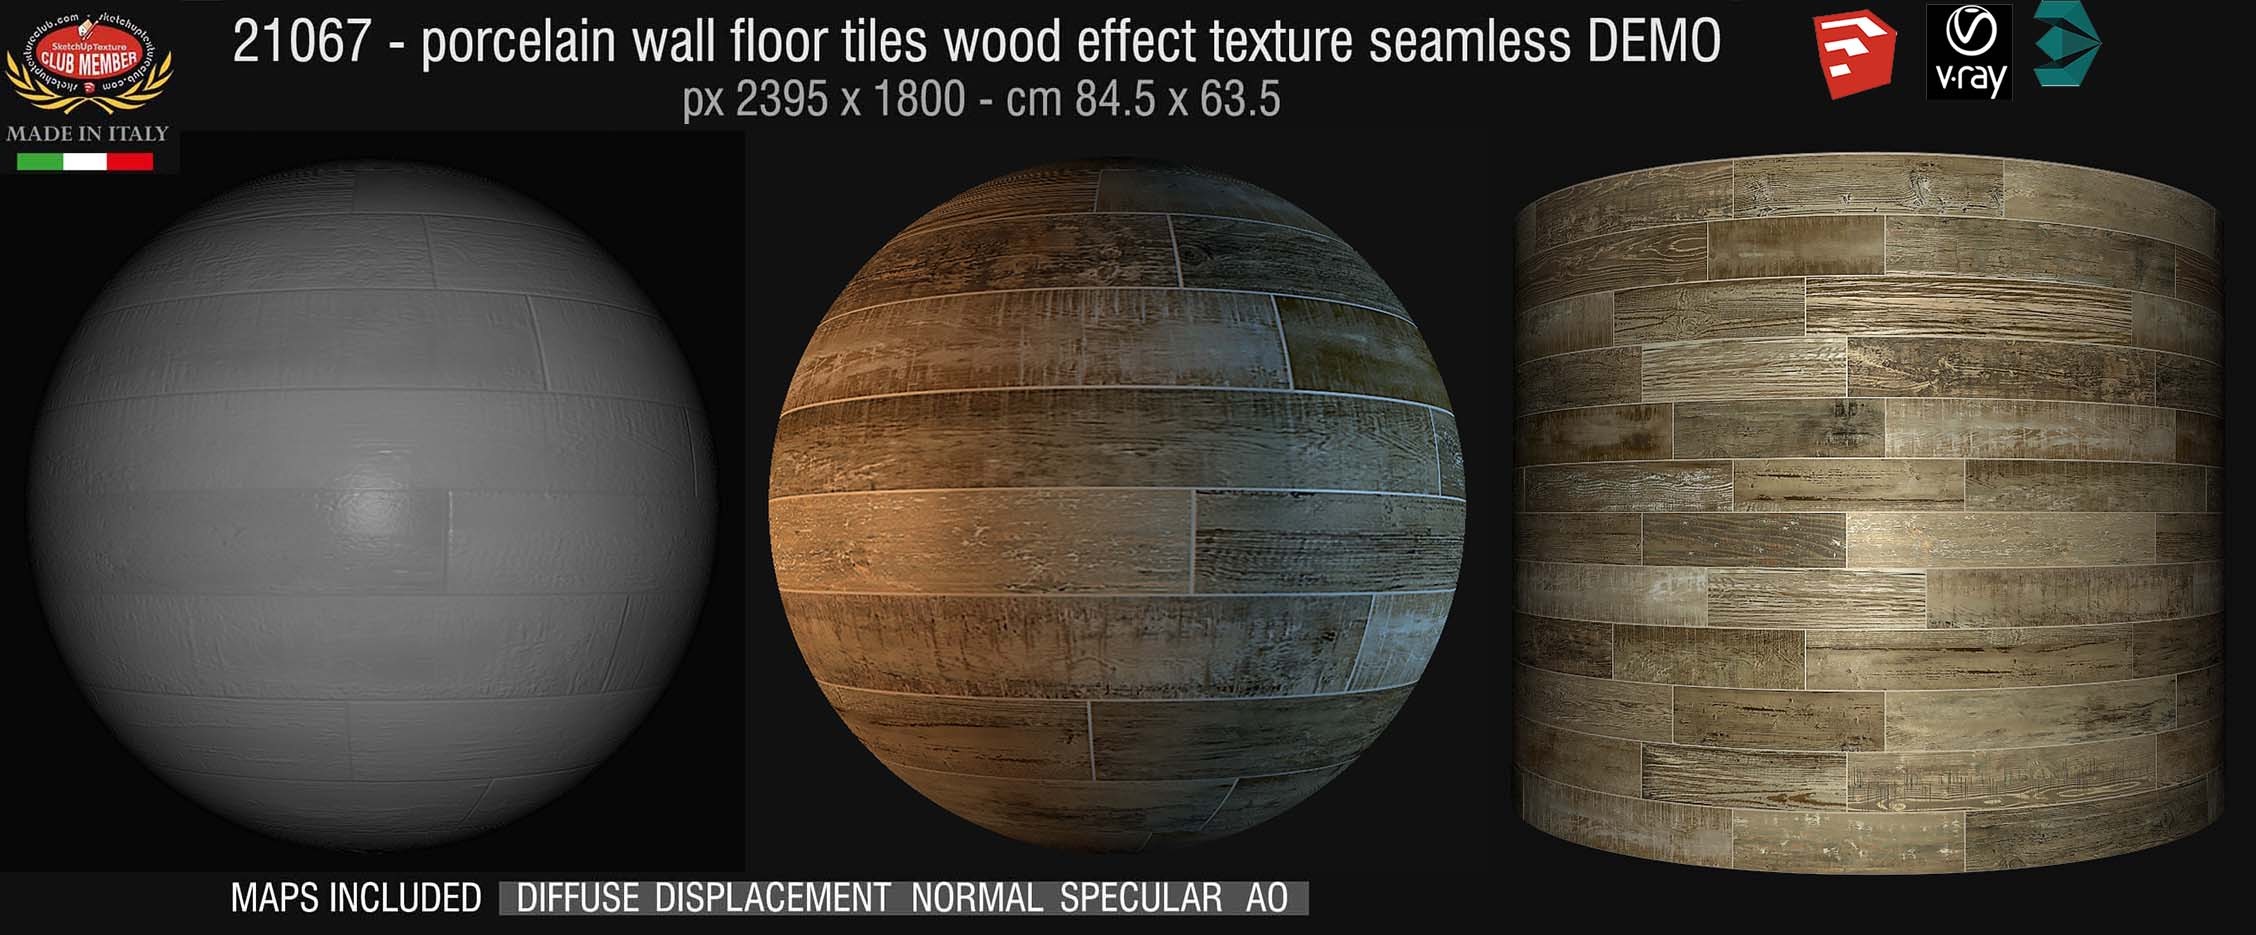 21067 Porcelain wall floor tiles wood effect PBR texture seamless + maps DEMO